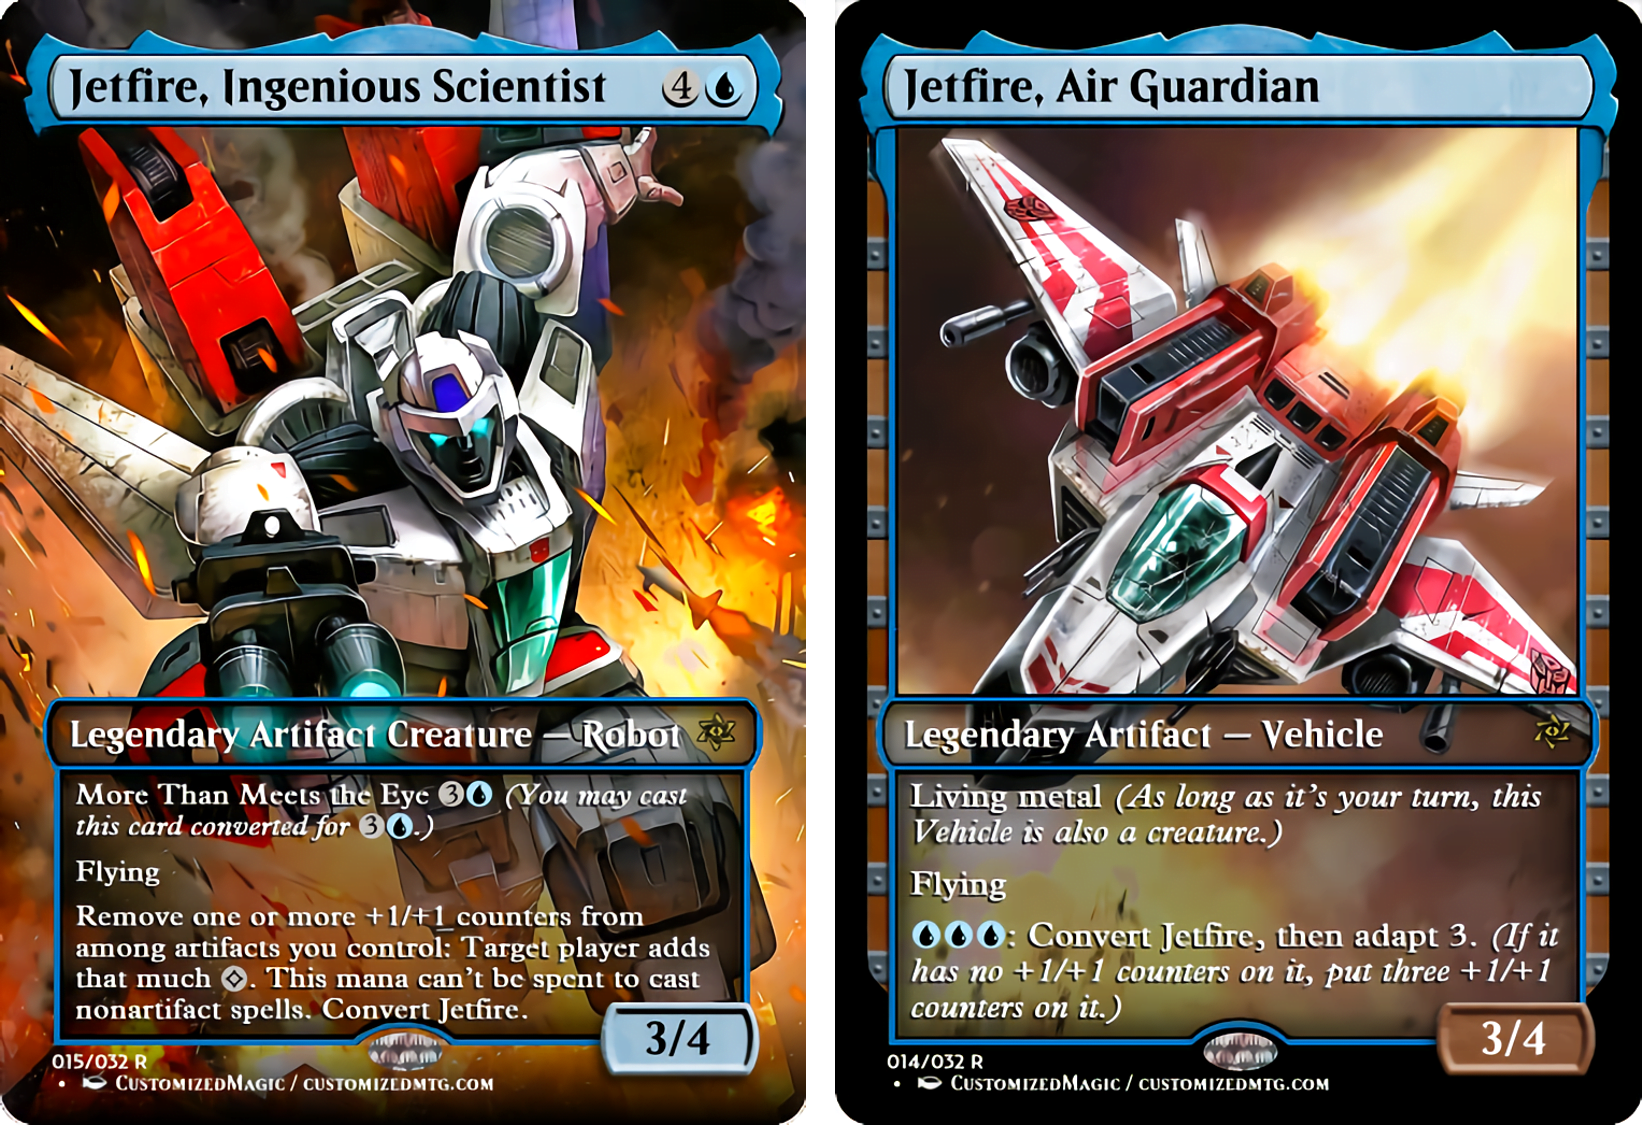 Transformers Commander Set | Jetfire Ingenious Scientist amd Jetfire Air Guardian | Magic the Gathering Proxy Cards